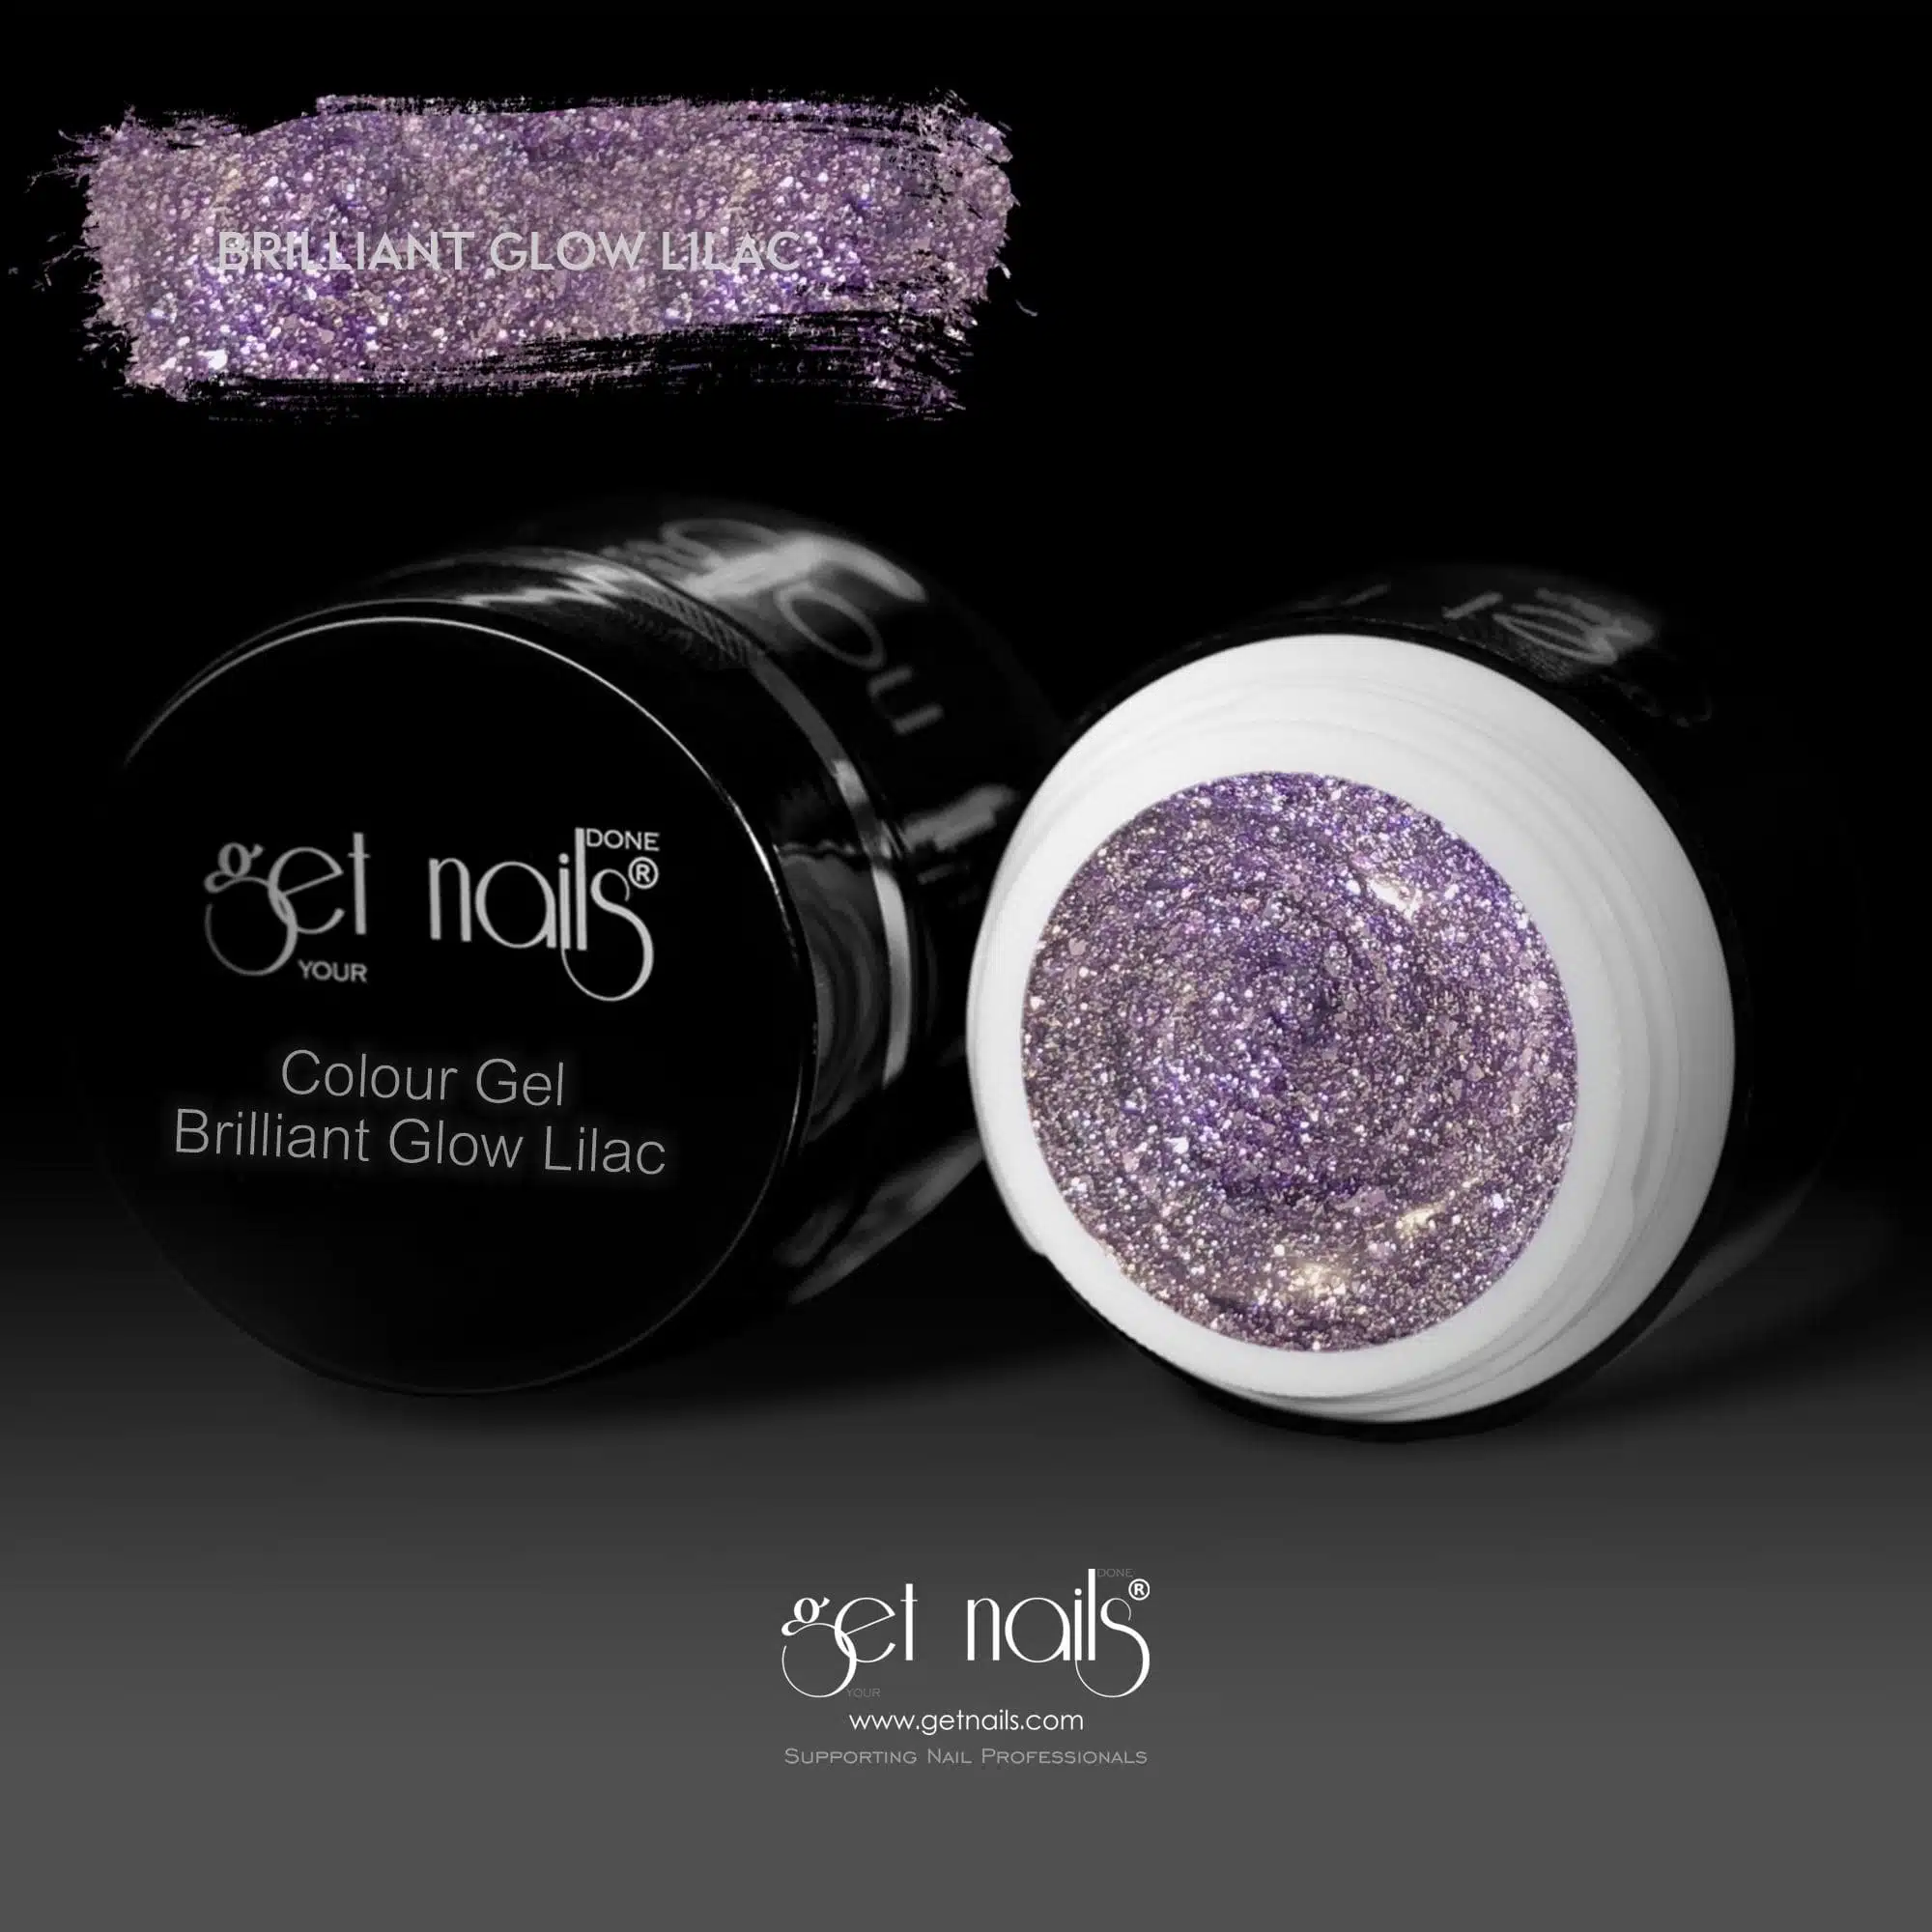 Get Nails Austria - Gel colorato Brilliant Glow Lilac 5g